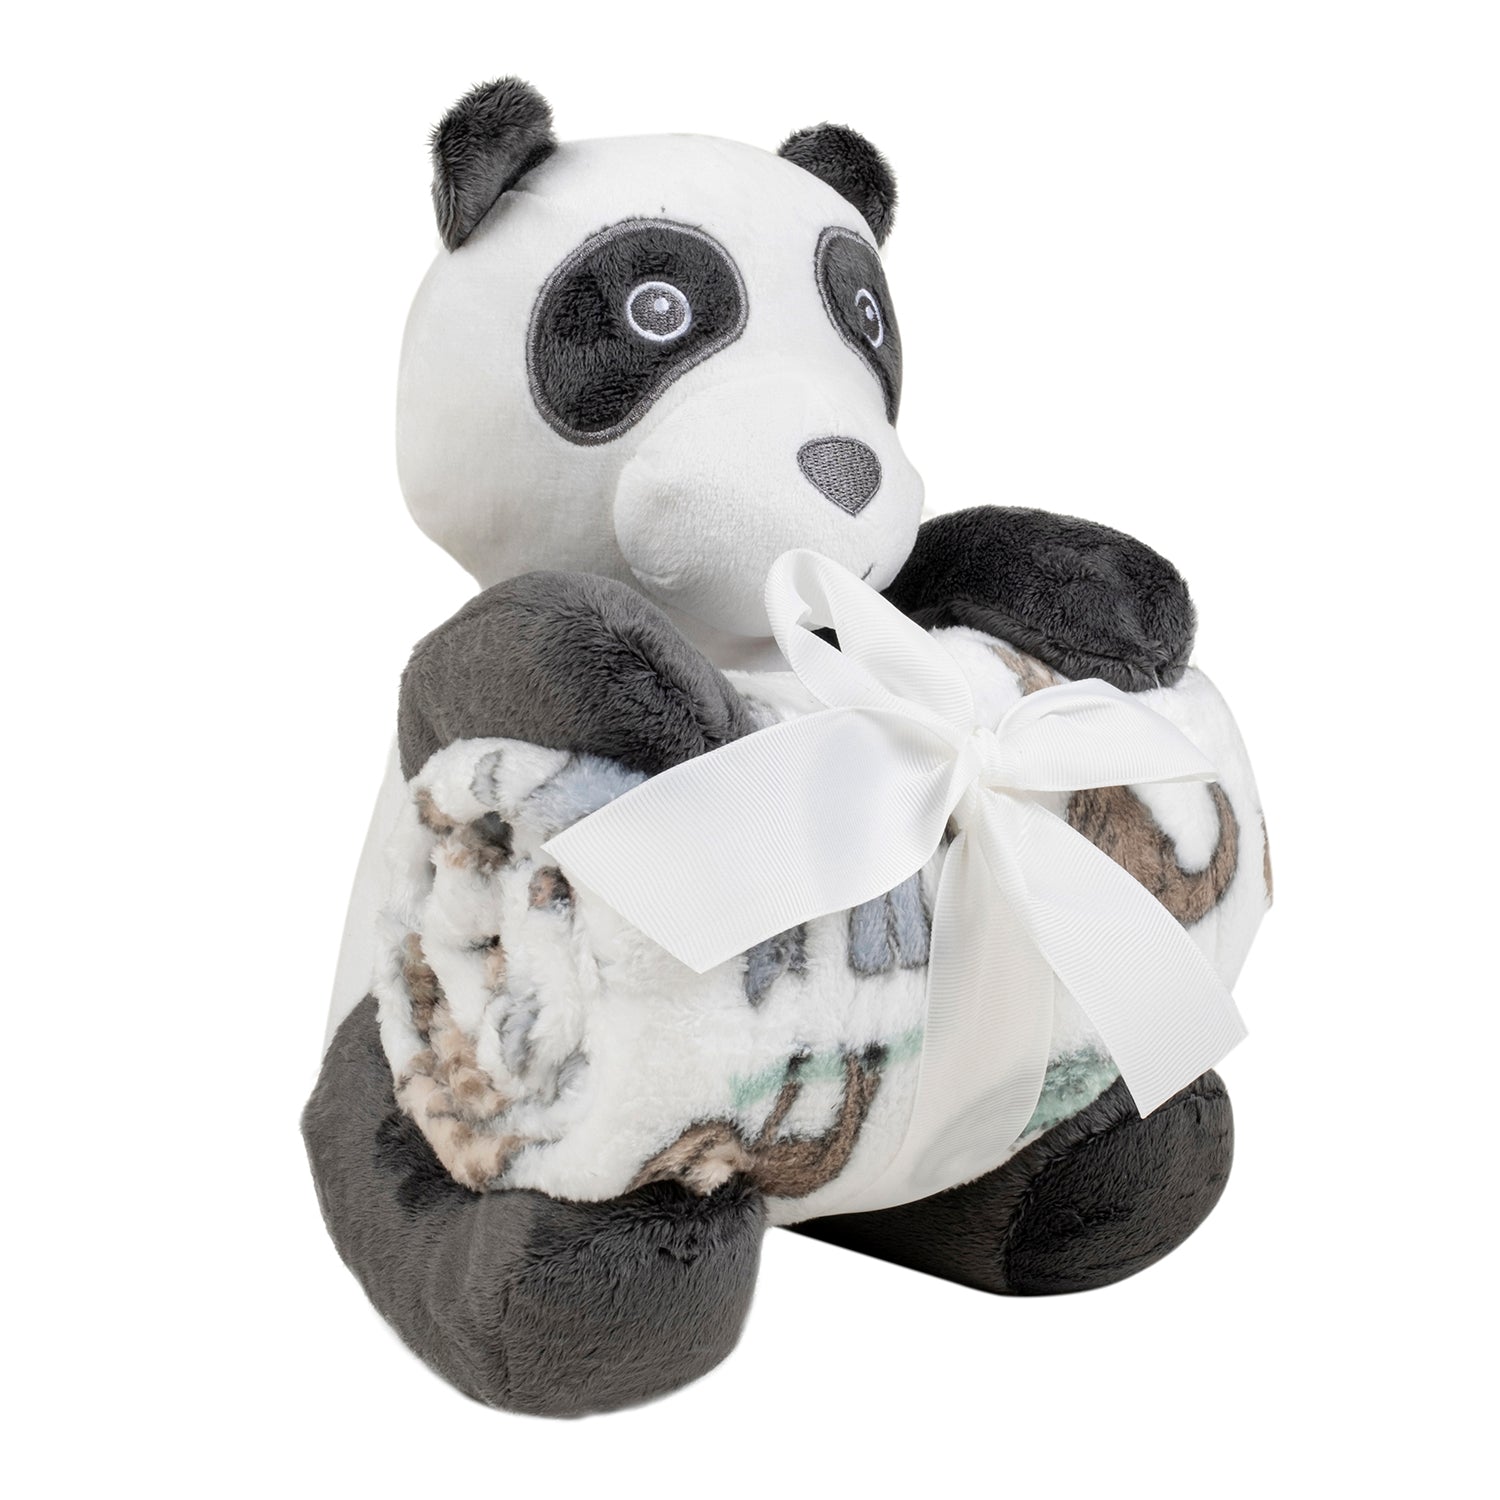 Baby Moo Panda Snuggle Buddy Soft Rattle and Plush Blanket Gift Toy Blanket - Black